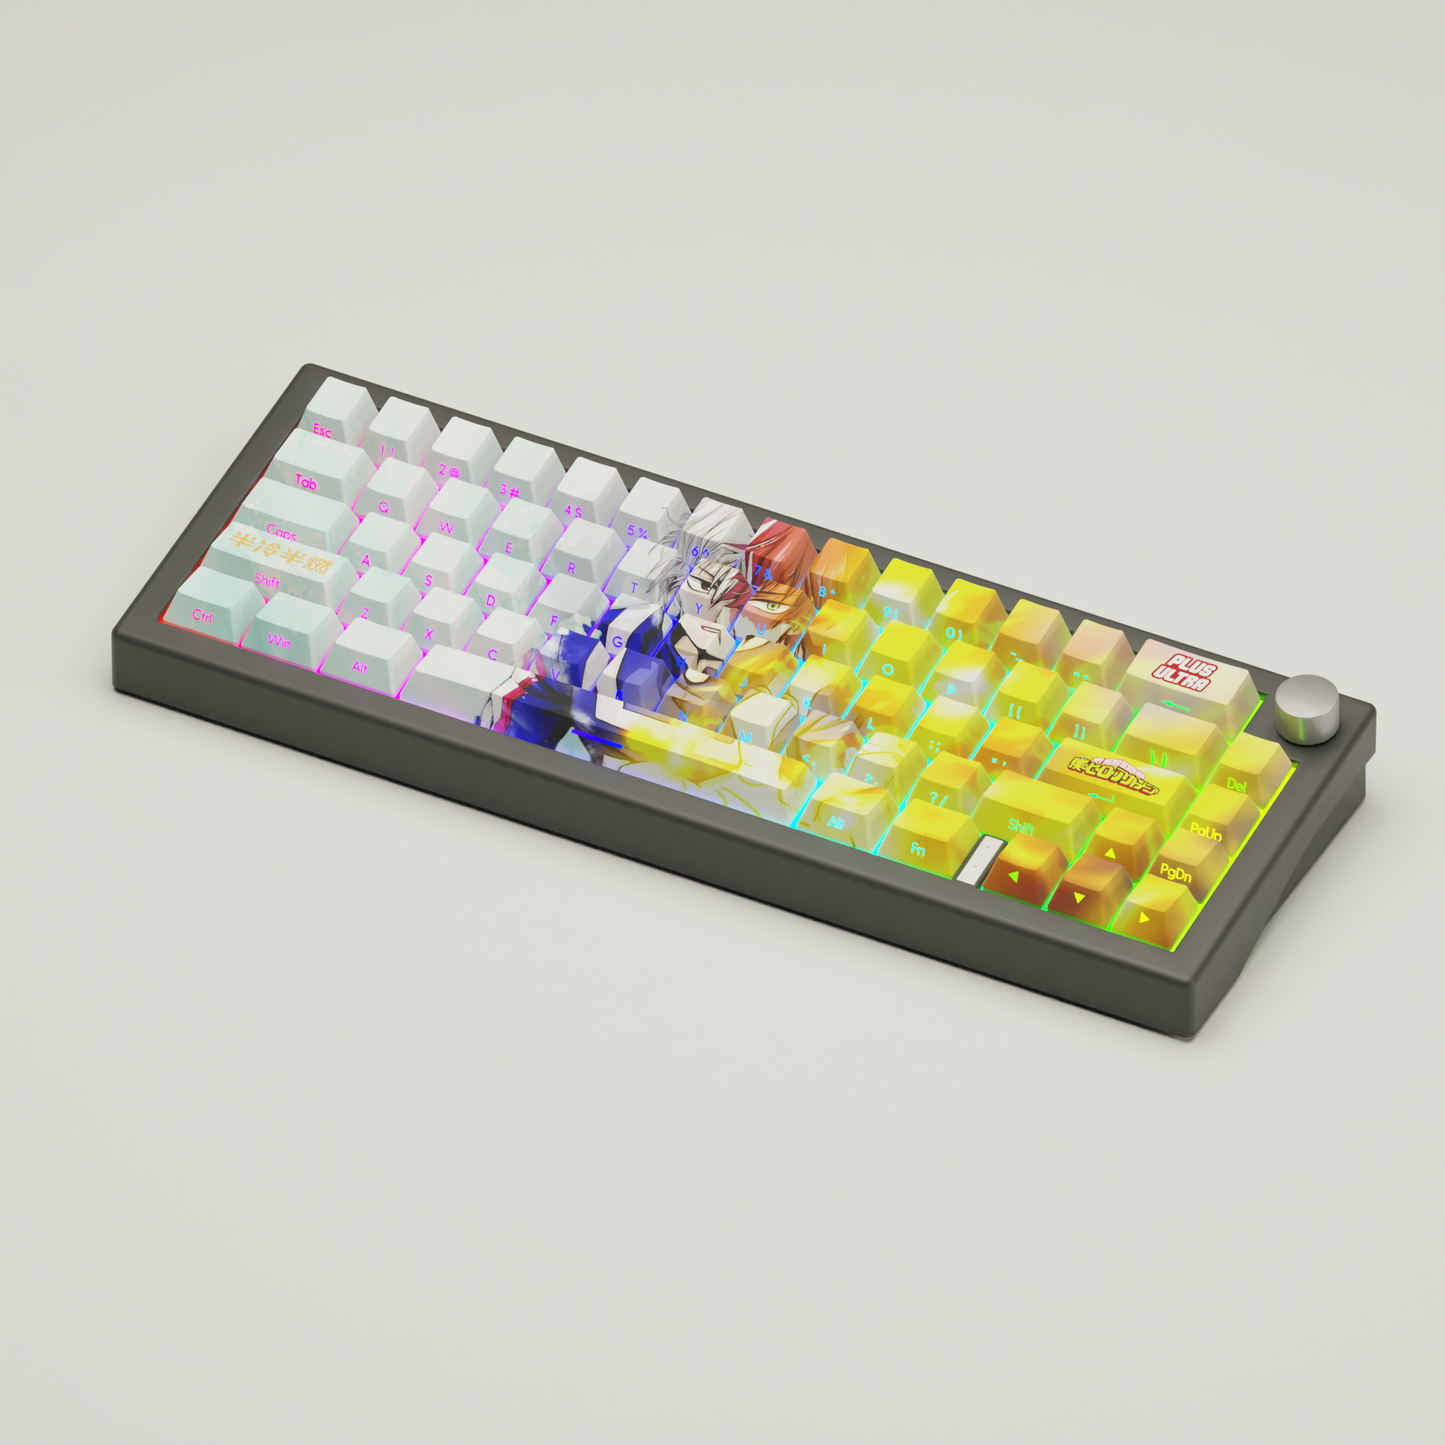 KEYBOARD - Limited Edition Custom 65% Keyboard - Hero Academia 68Keys RGB backlight, triple mode (wired, wireless and bluetooth)